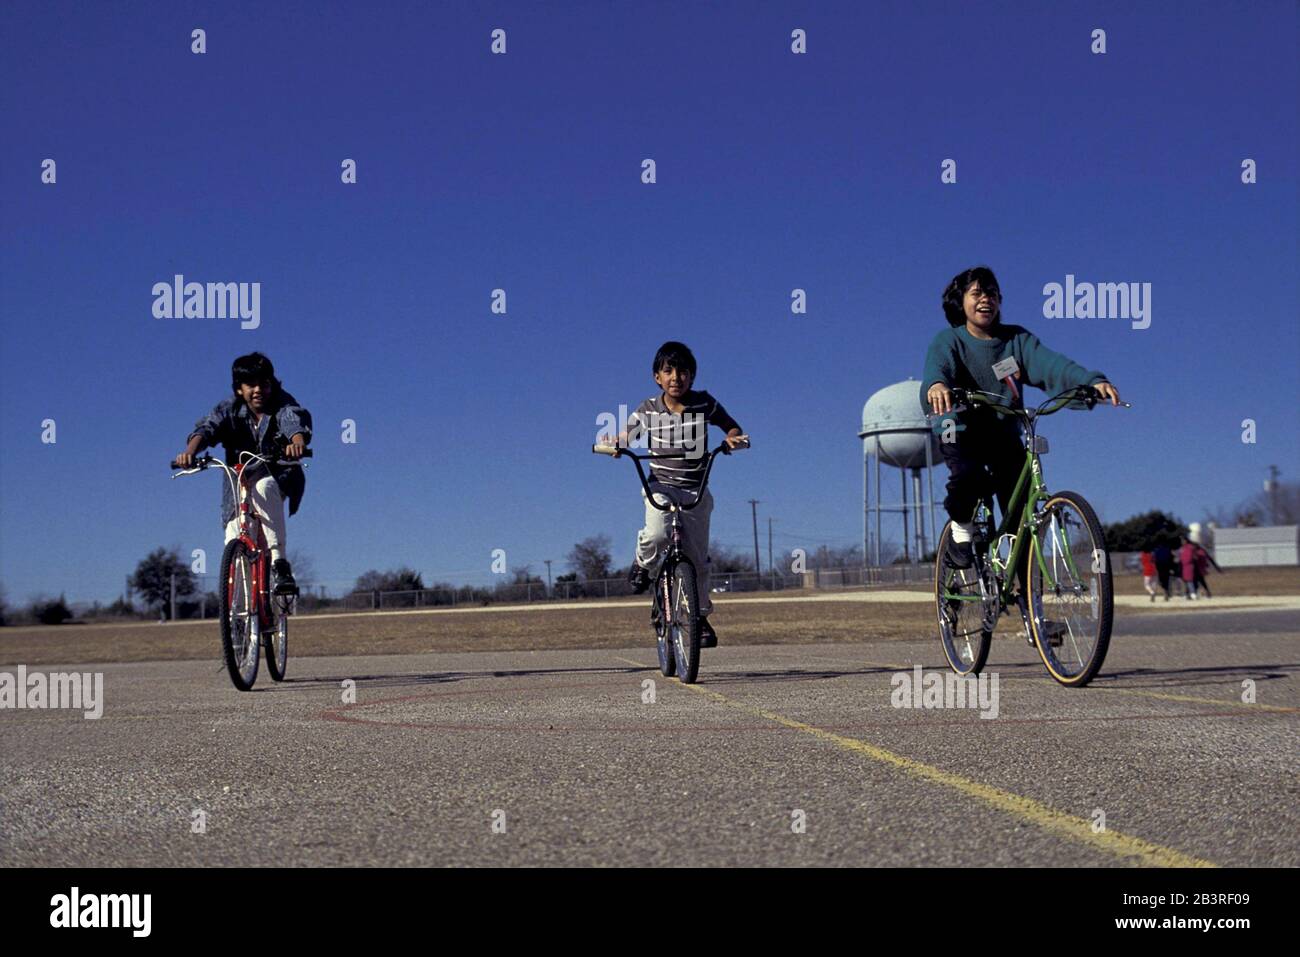 https://c8.alamy.com/compde/2b3rf09/austin-texas-usa-hispanische-kinder-fahren-auf-dem-parkplatz-ohne-helme-fahrrad-bob-daemmrich-2b3rf09.jpg